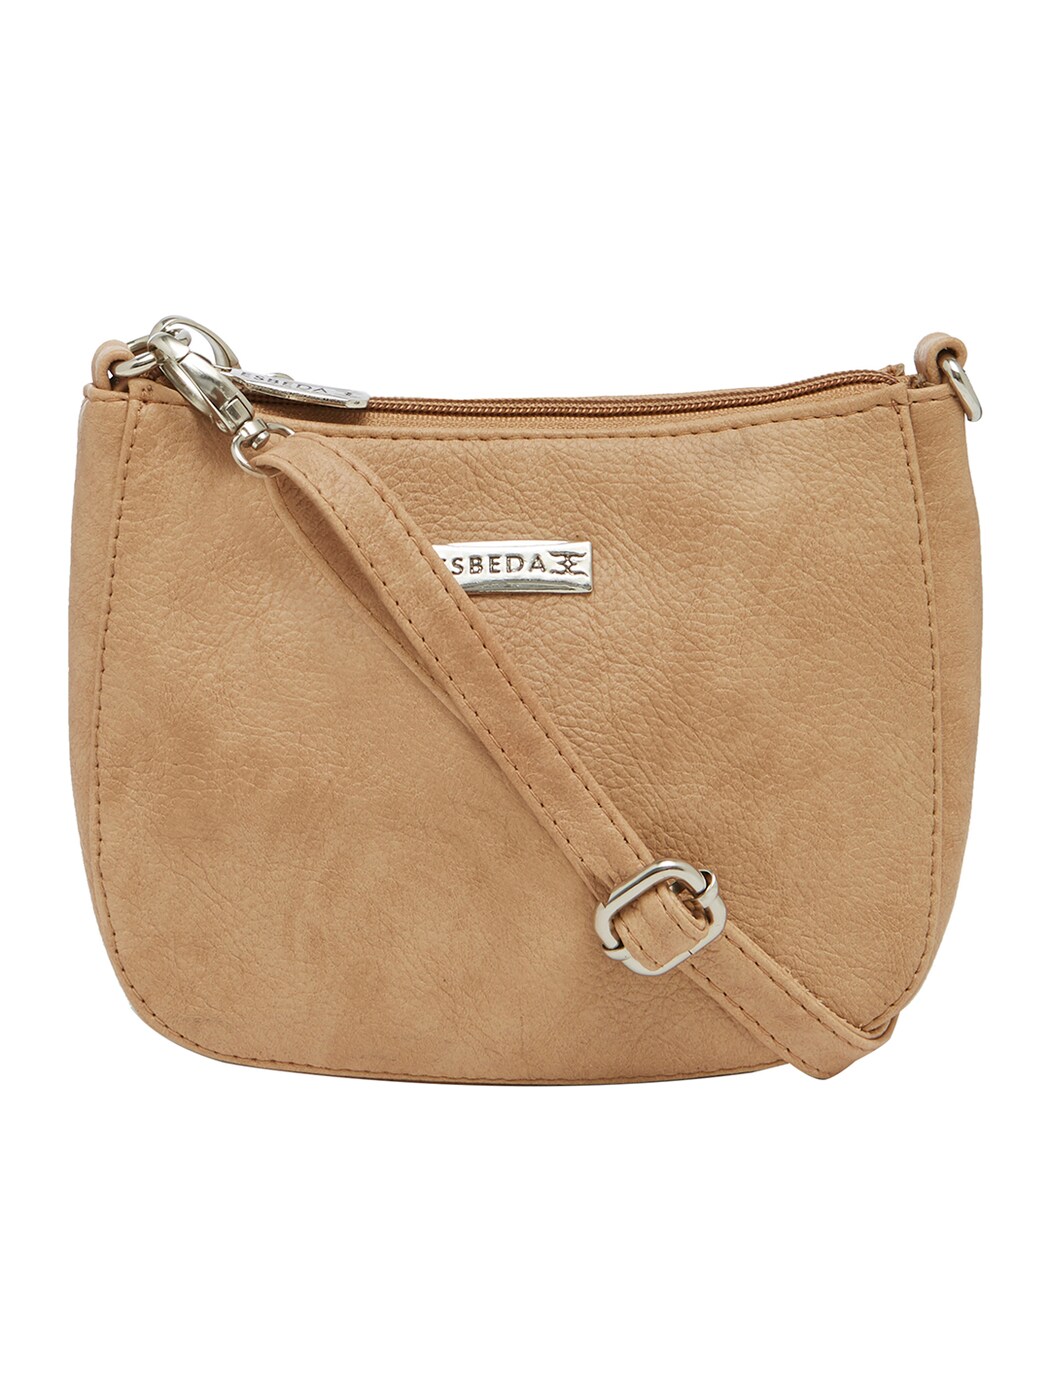 Buy Esbeda Golden Textured Handbag For Women At Best Price @ Tata CLiQ